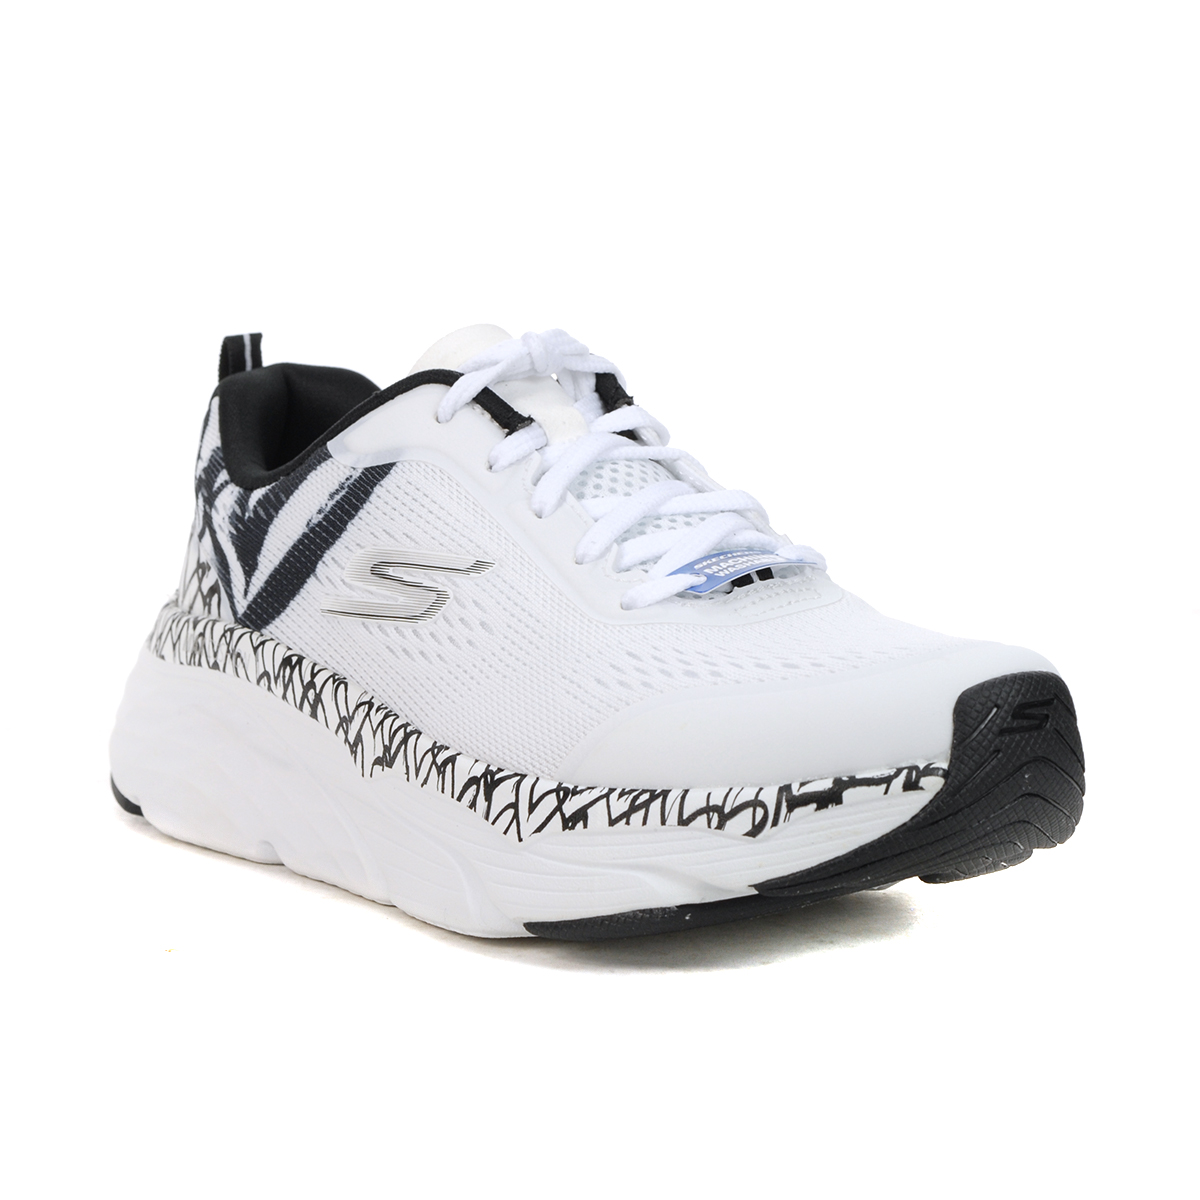 Cilia baseren smaak Skechers Women's Max Cushioning Elite - Forever Loving White/Black Running  Shoes - WOOKI.COM